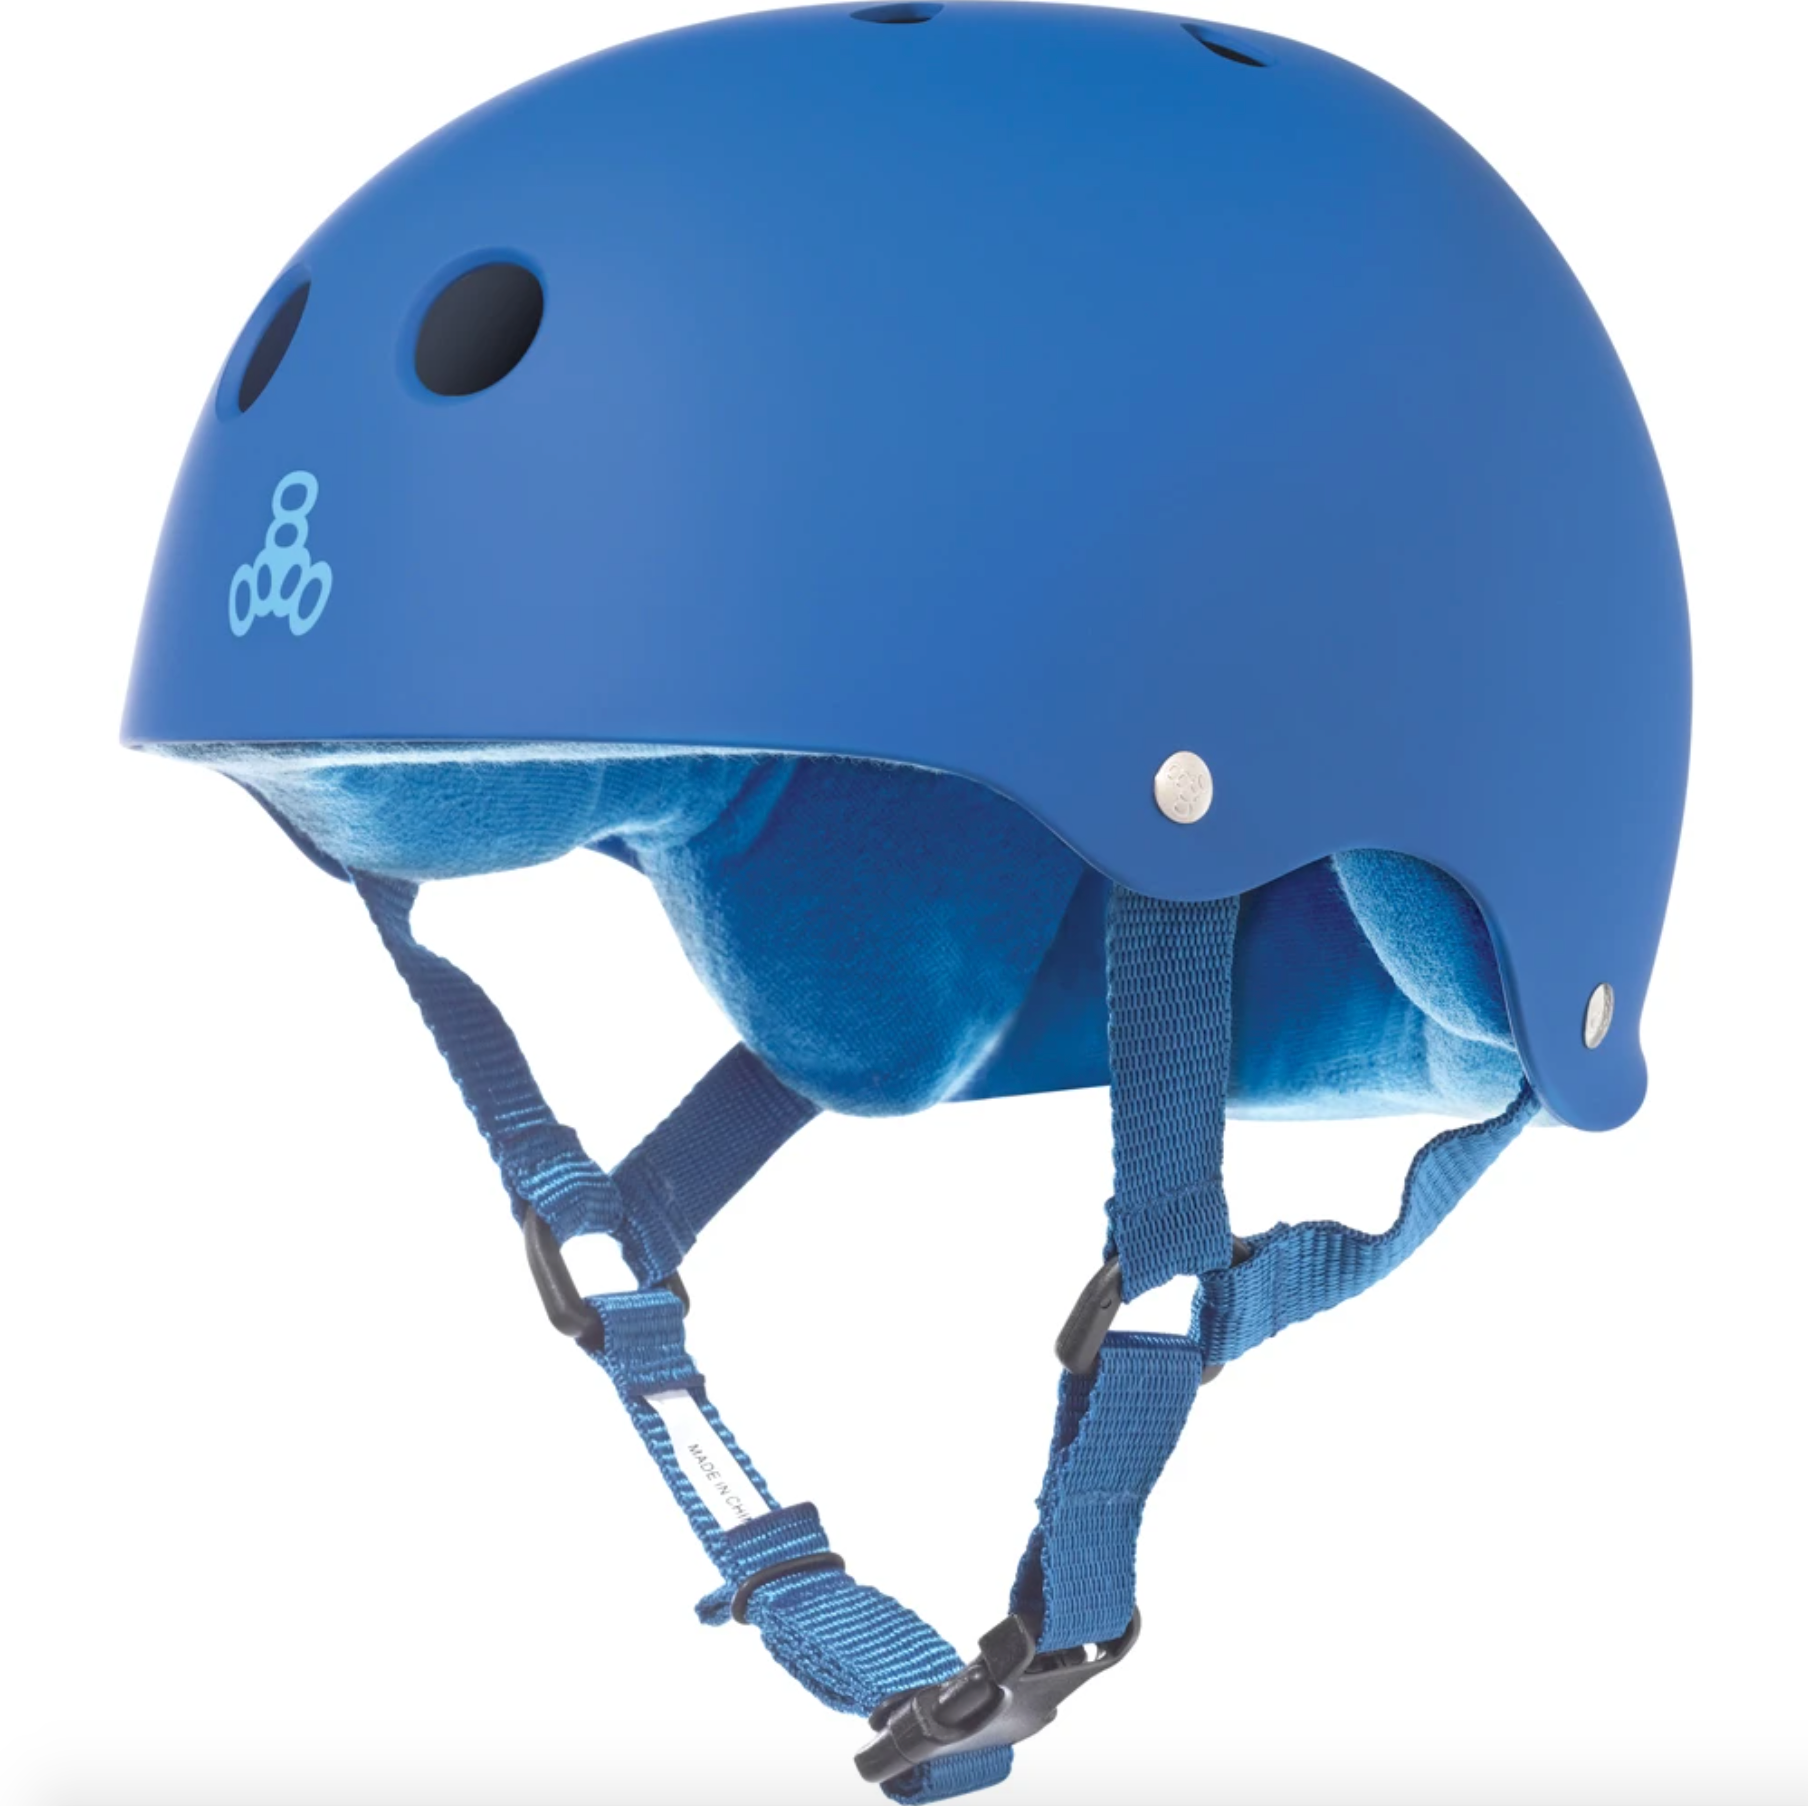 Triple 8 Sweatsaver Blue skate helmet